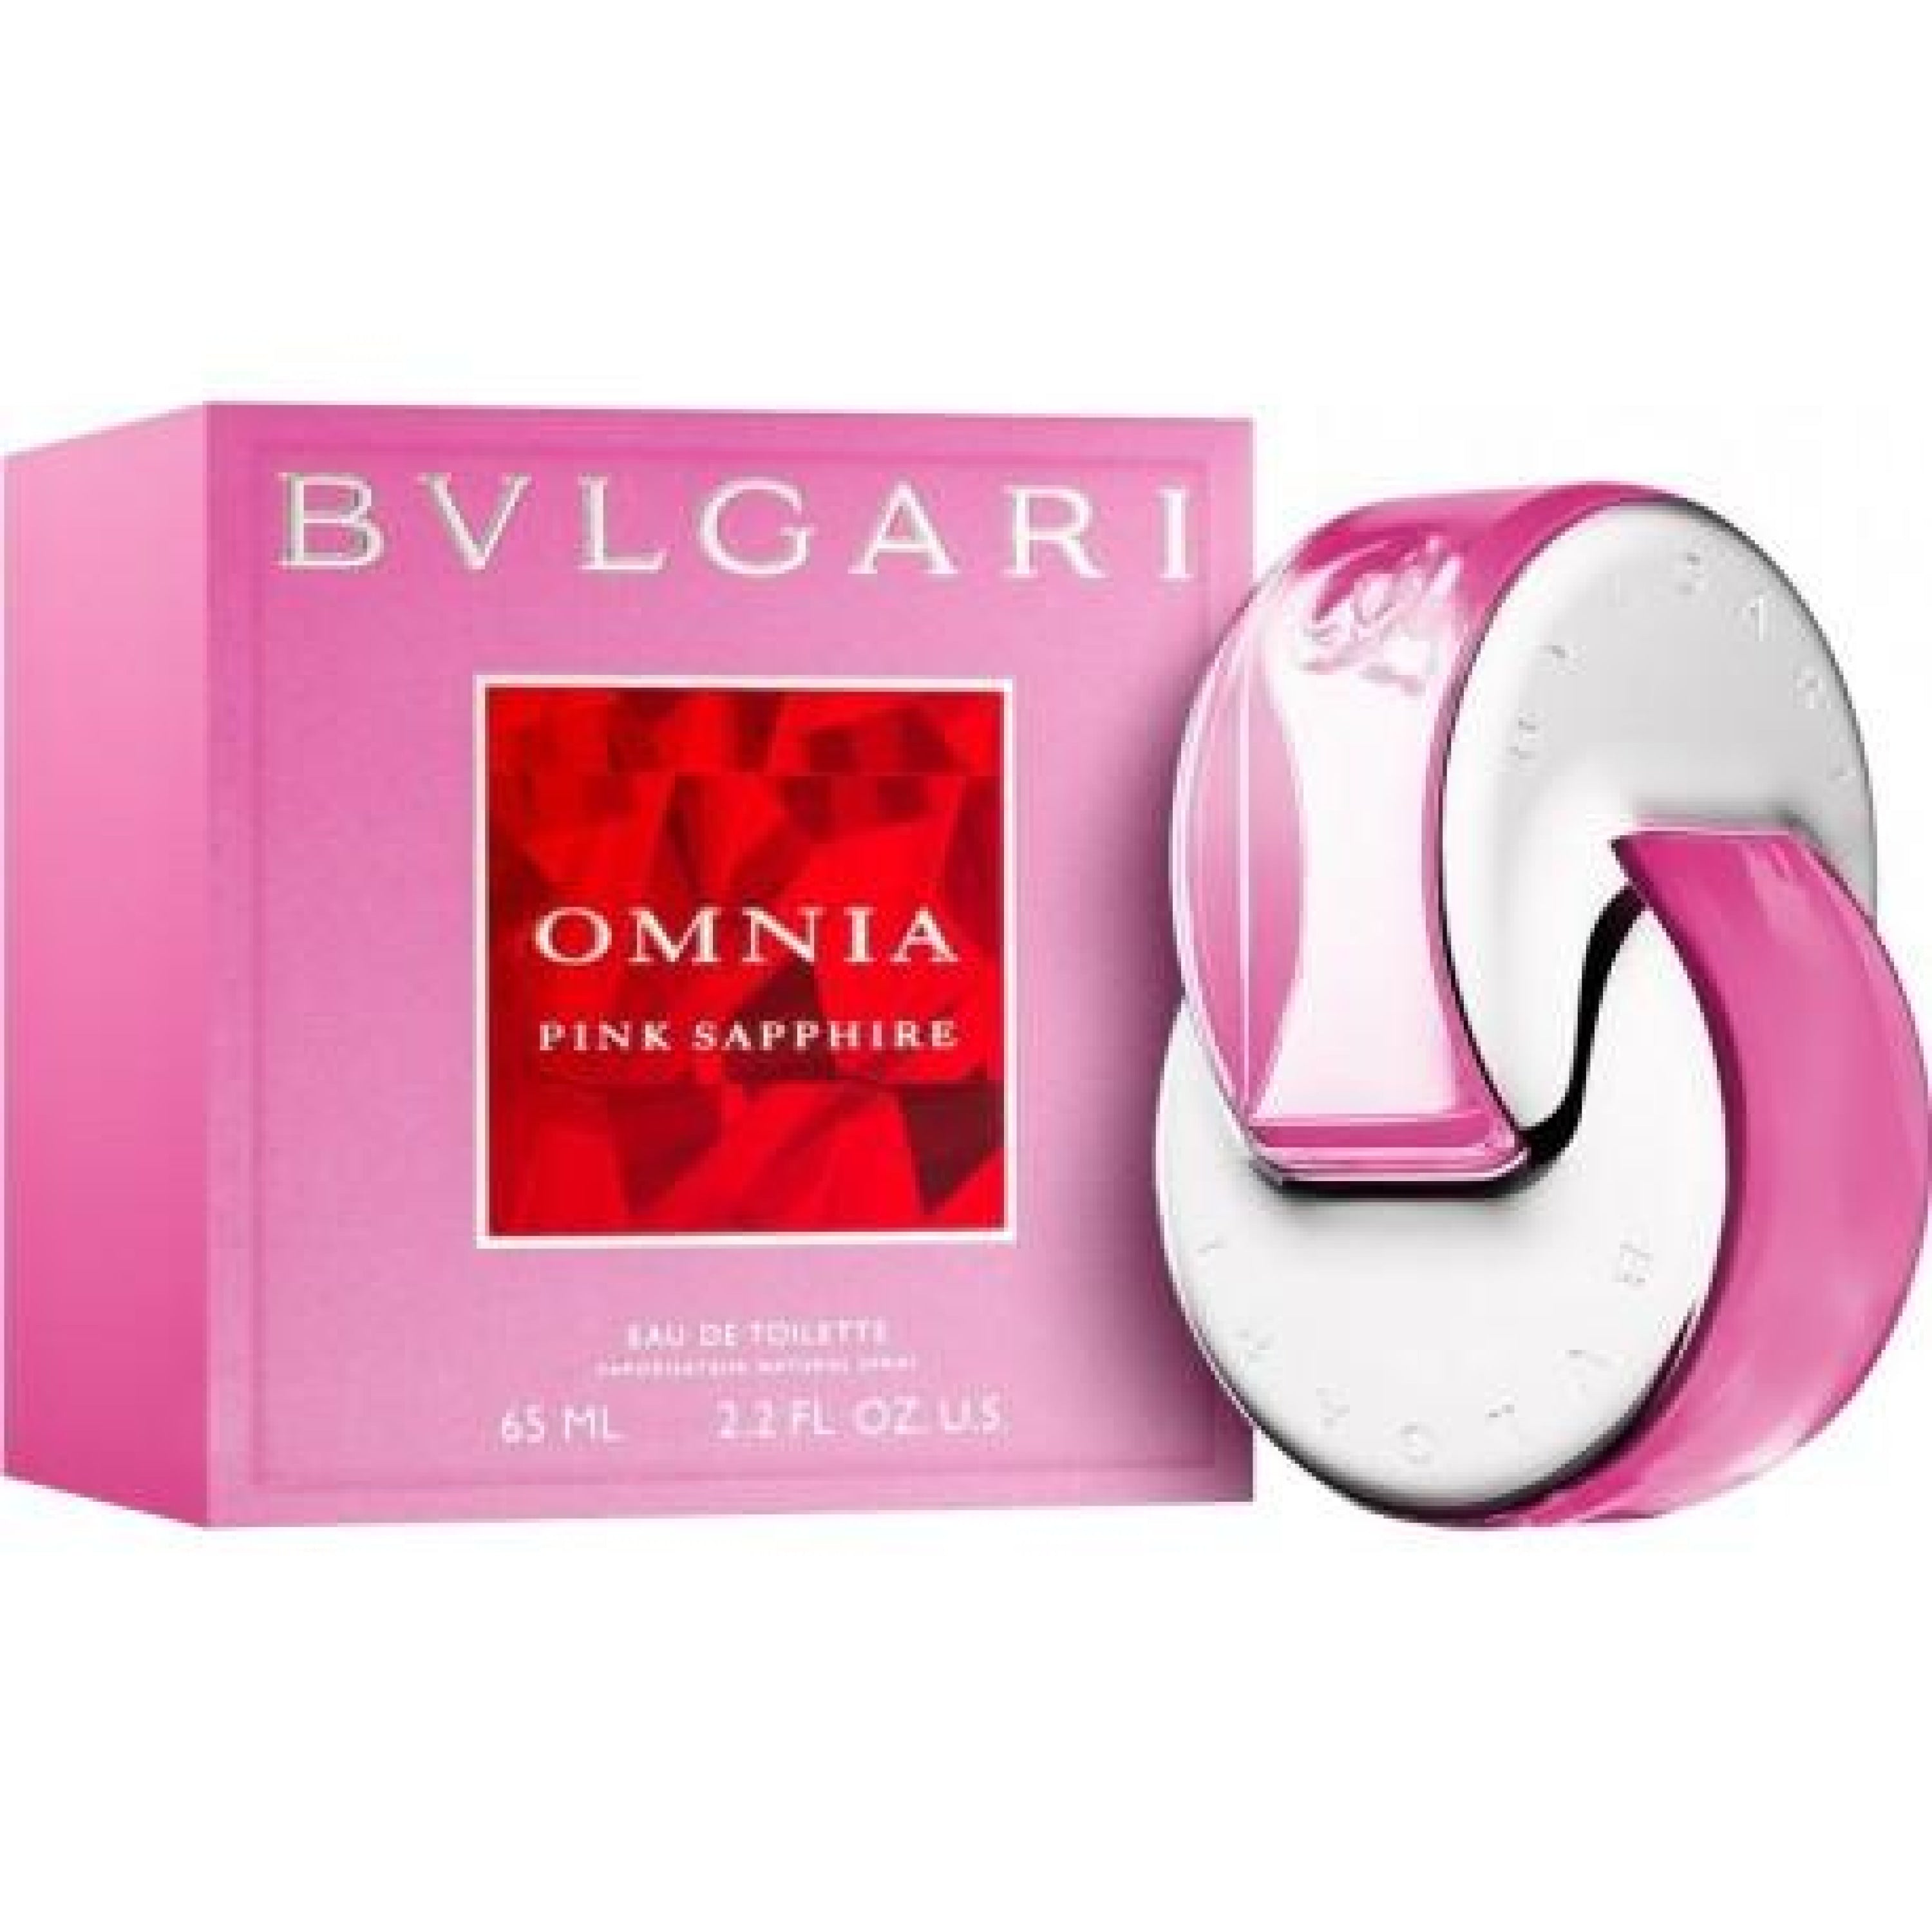 bvlgari omnia pink sapphire (vintage packaging) 65ml edt spray (w)